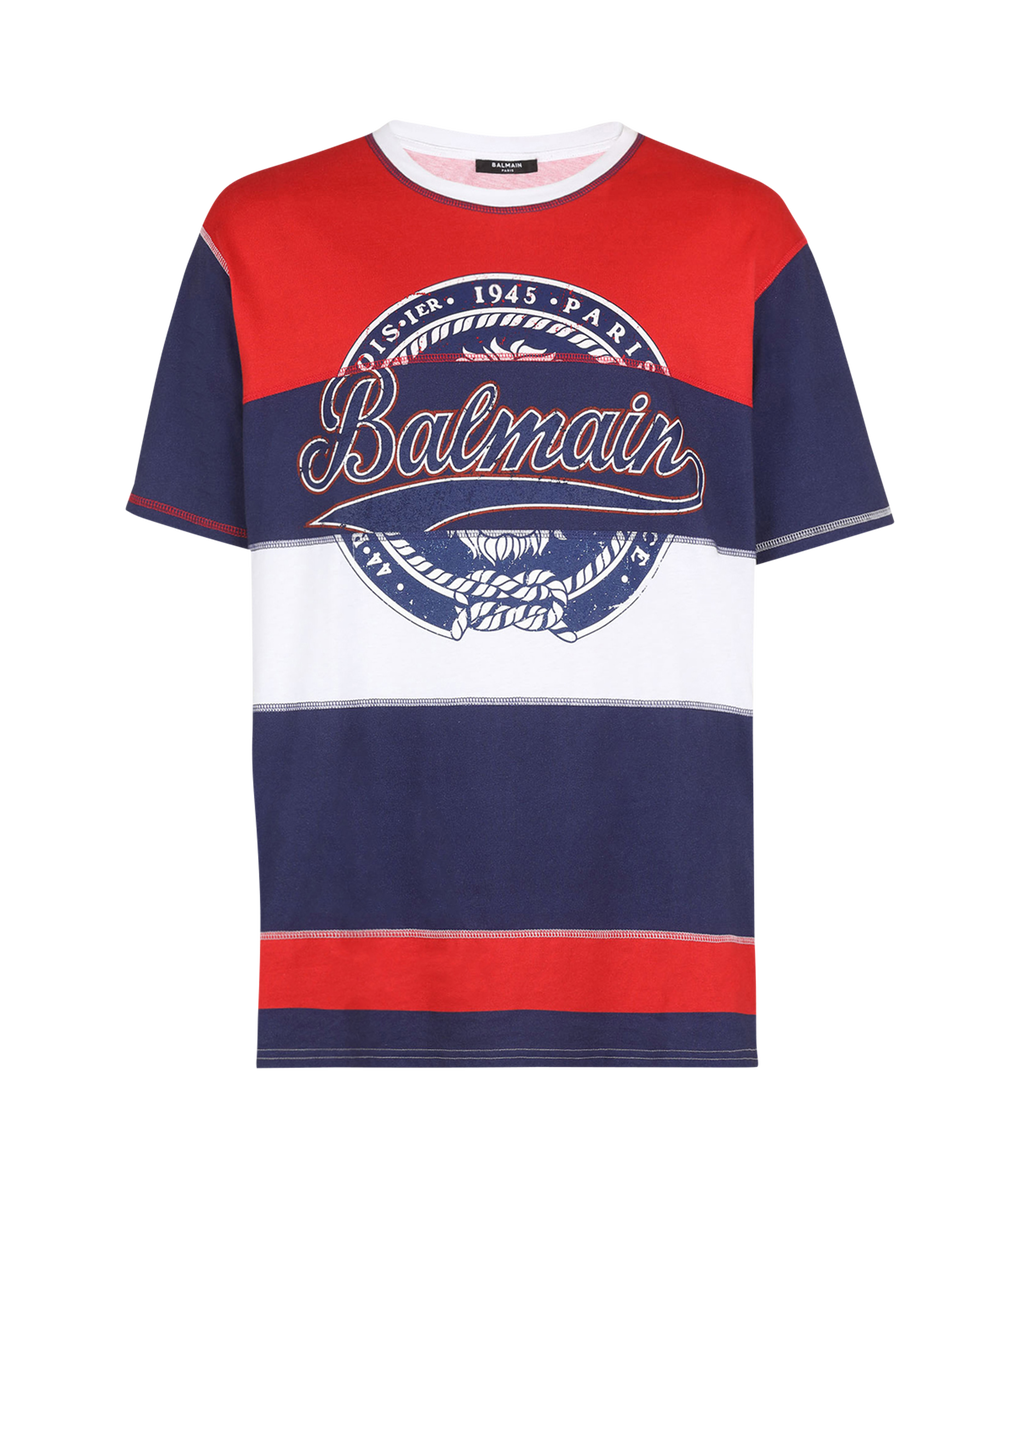 HIGH SUMMER CAPSULE KOLLEKTION – Baumwoll-T-Shirt, multicolor, hi-res